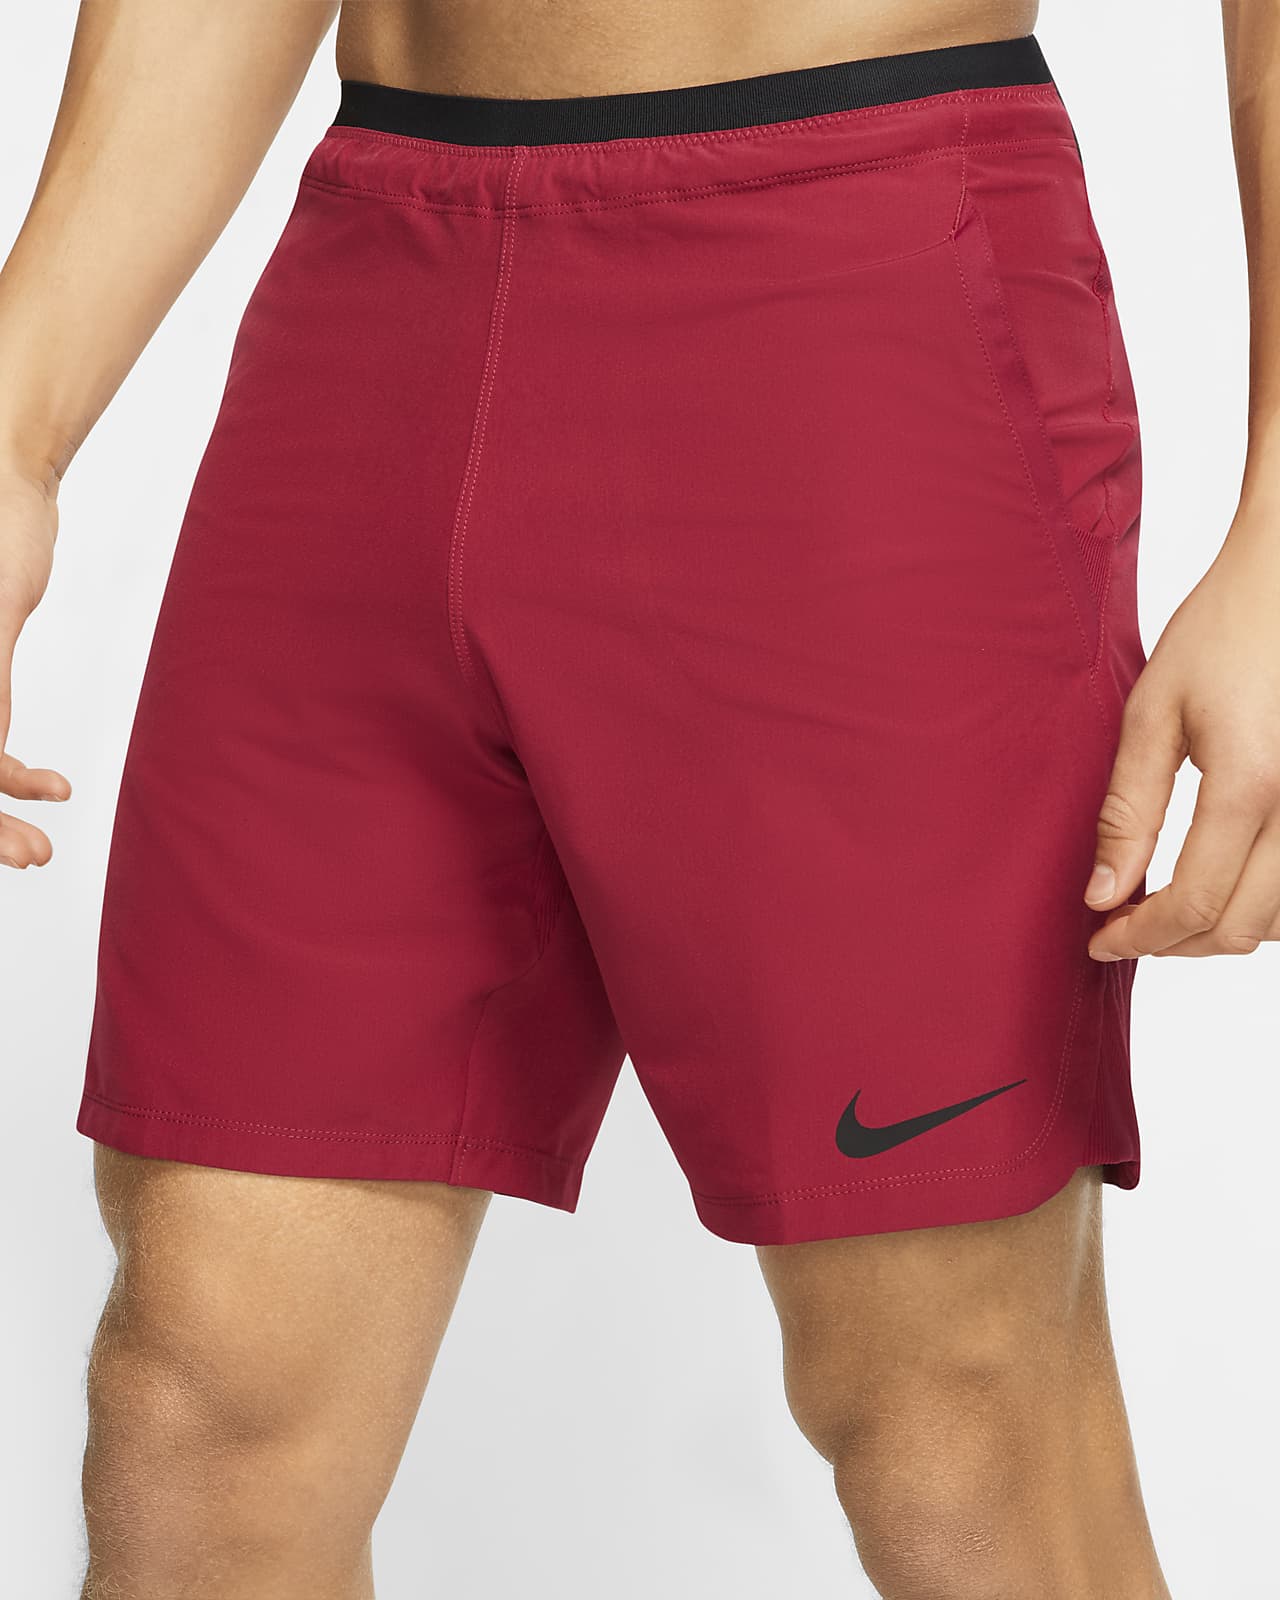 nike flex repel men's training shorts